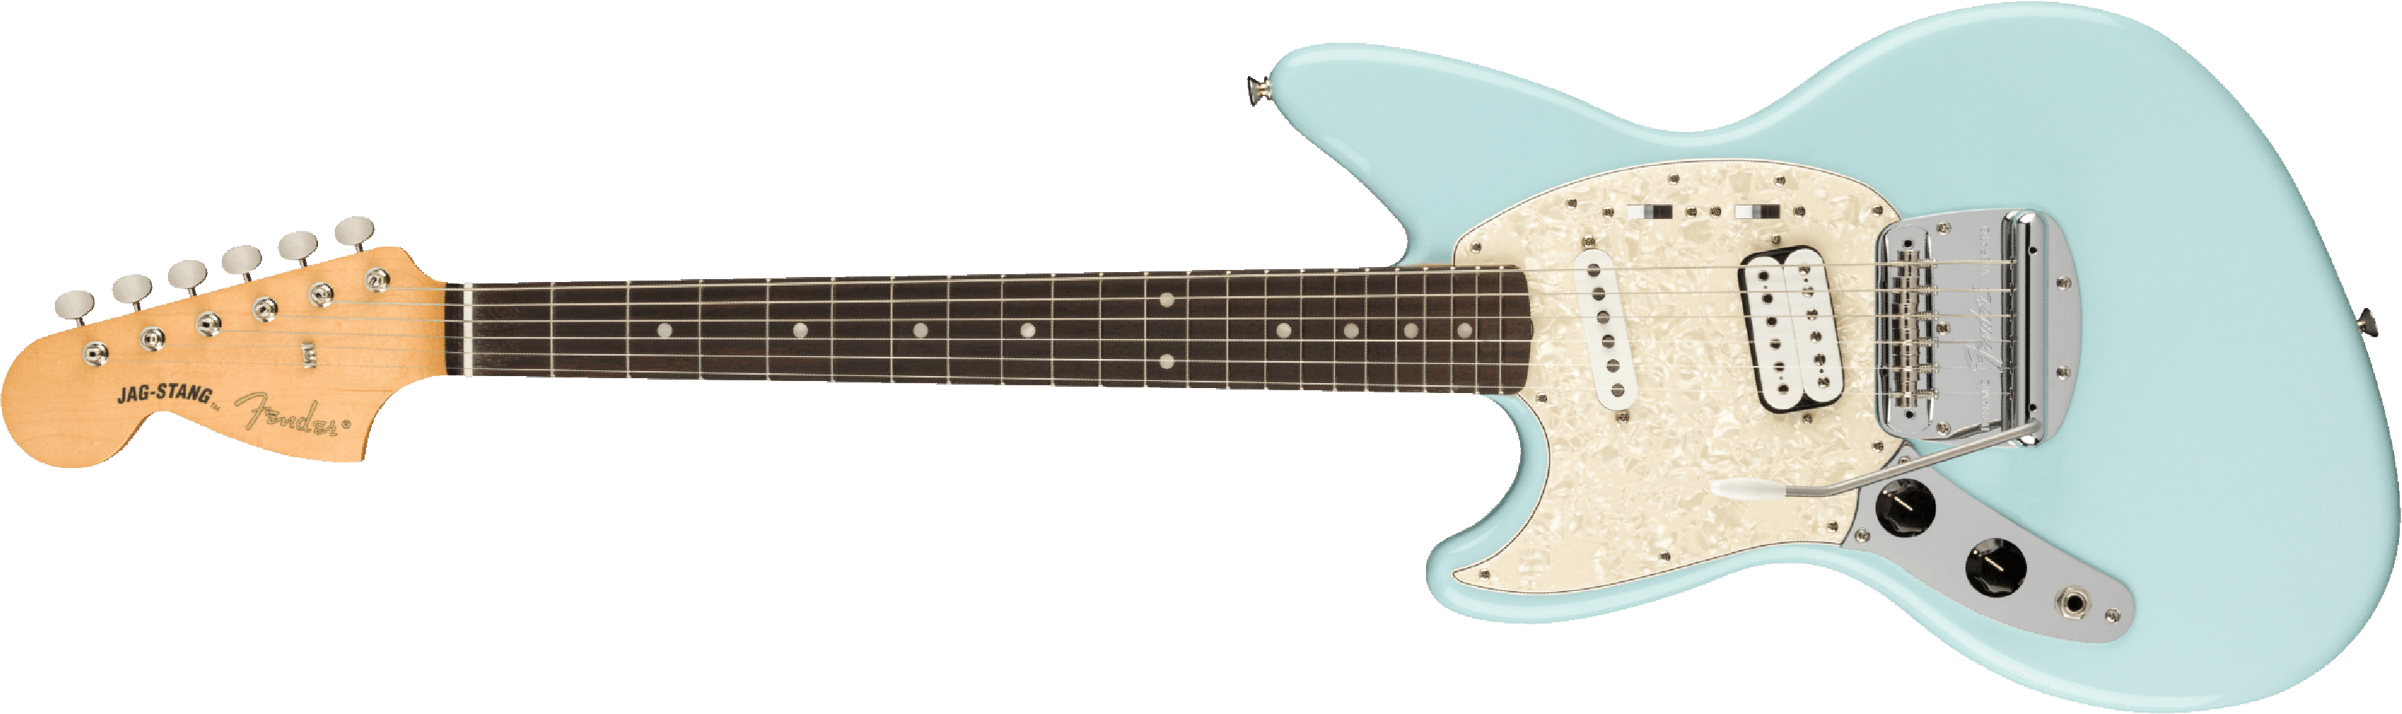 Fender Jag-stang Kurt Cobain Artist Gaucher Hs Trem Rw - Sonic Blue - Left-handed electric guitar - Main picture